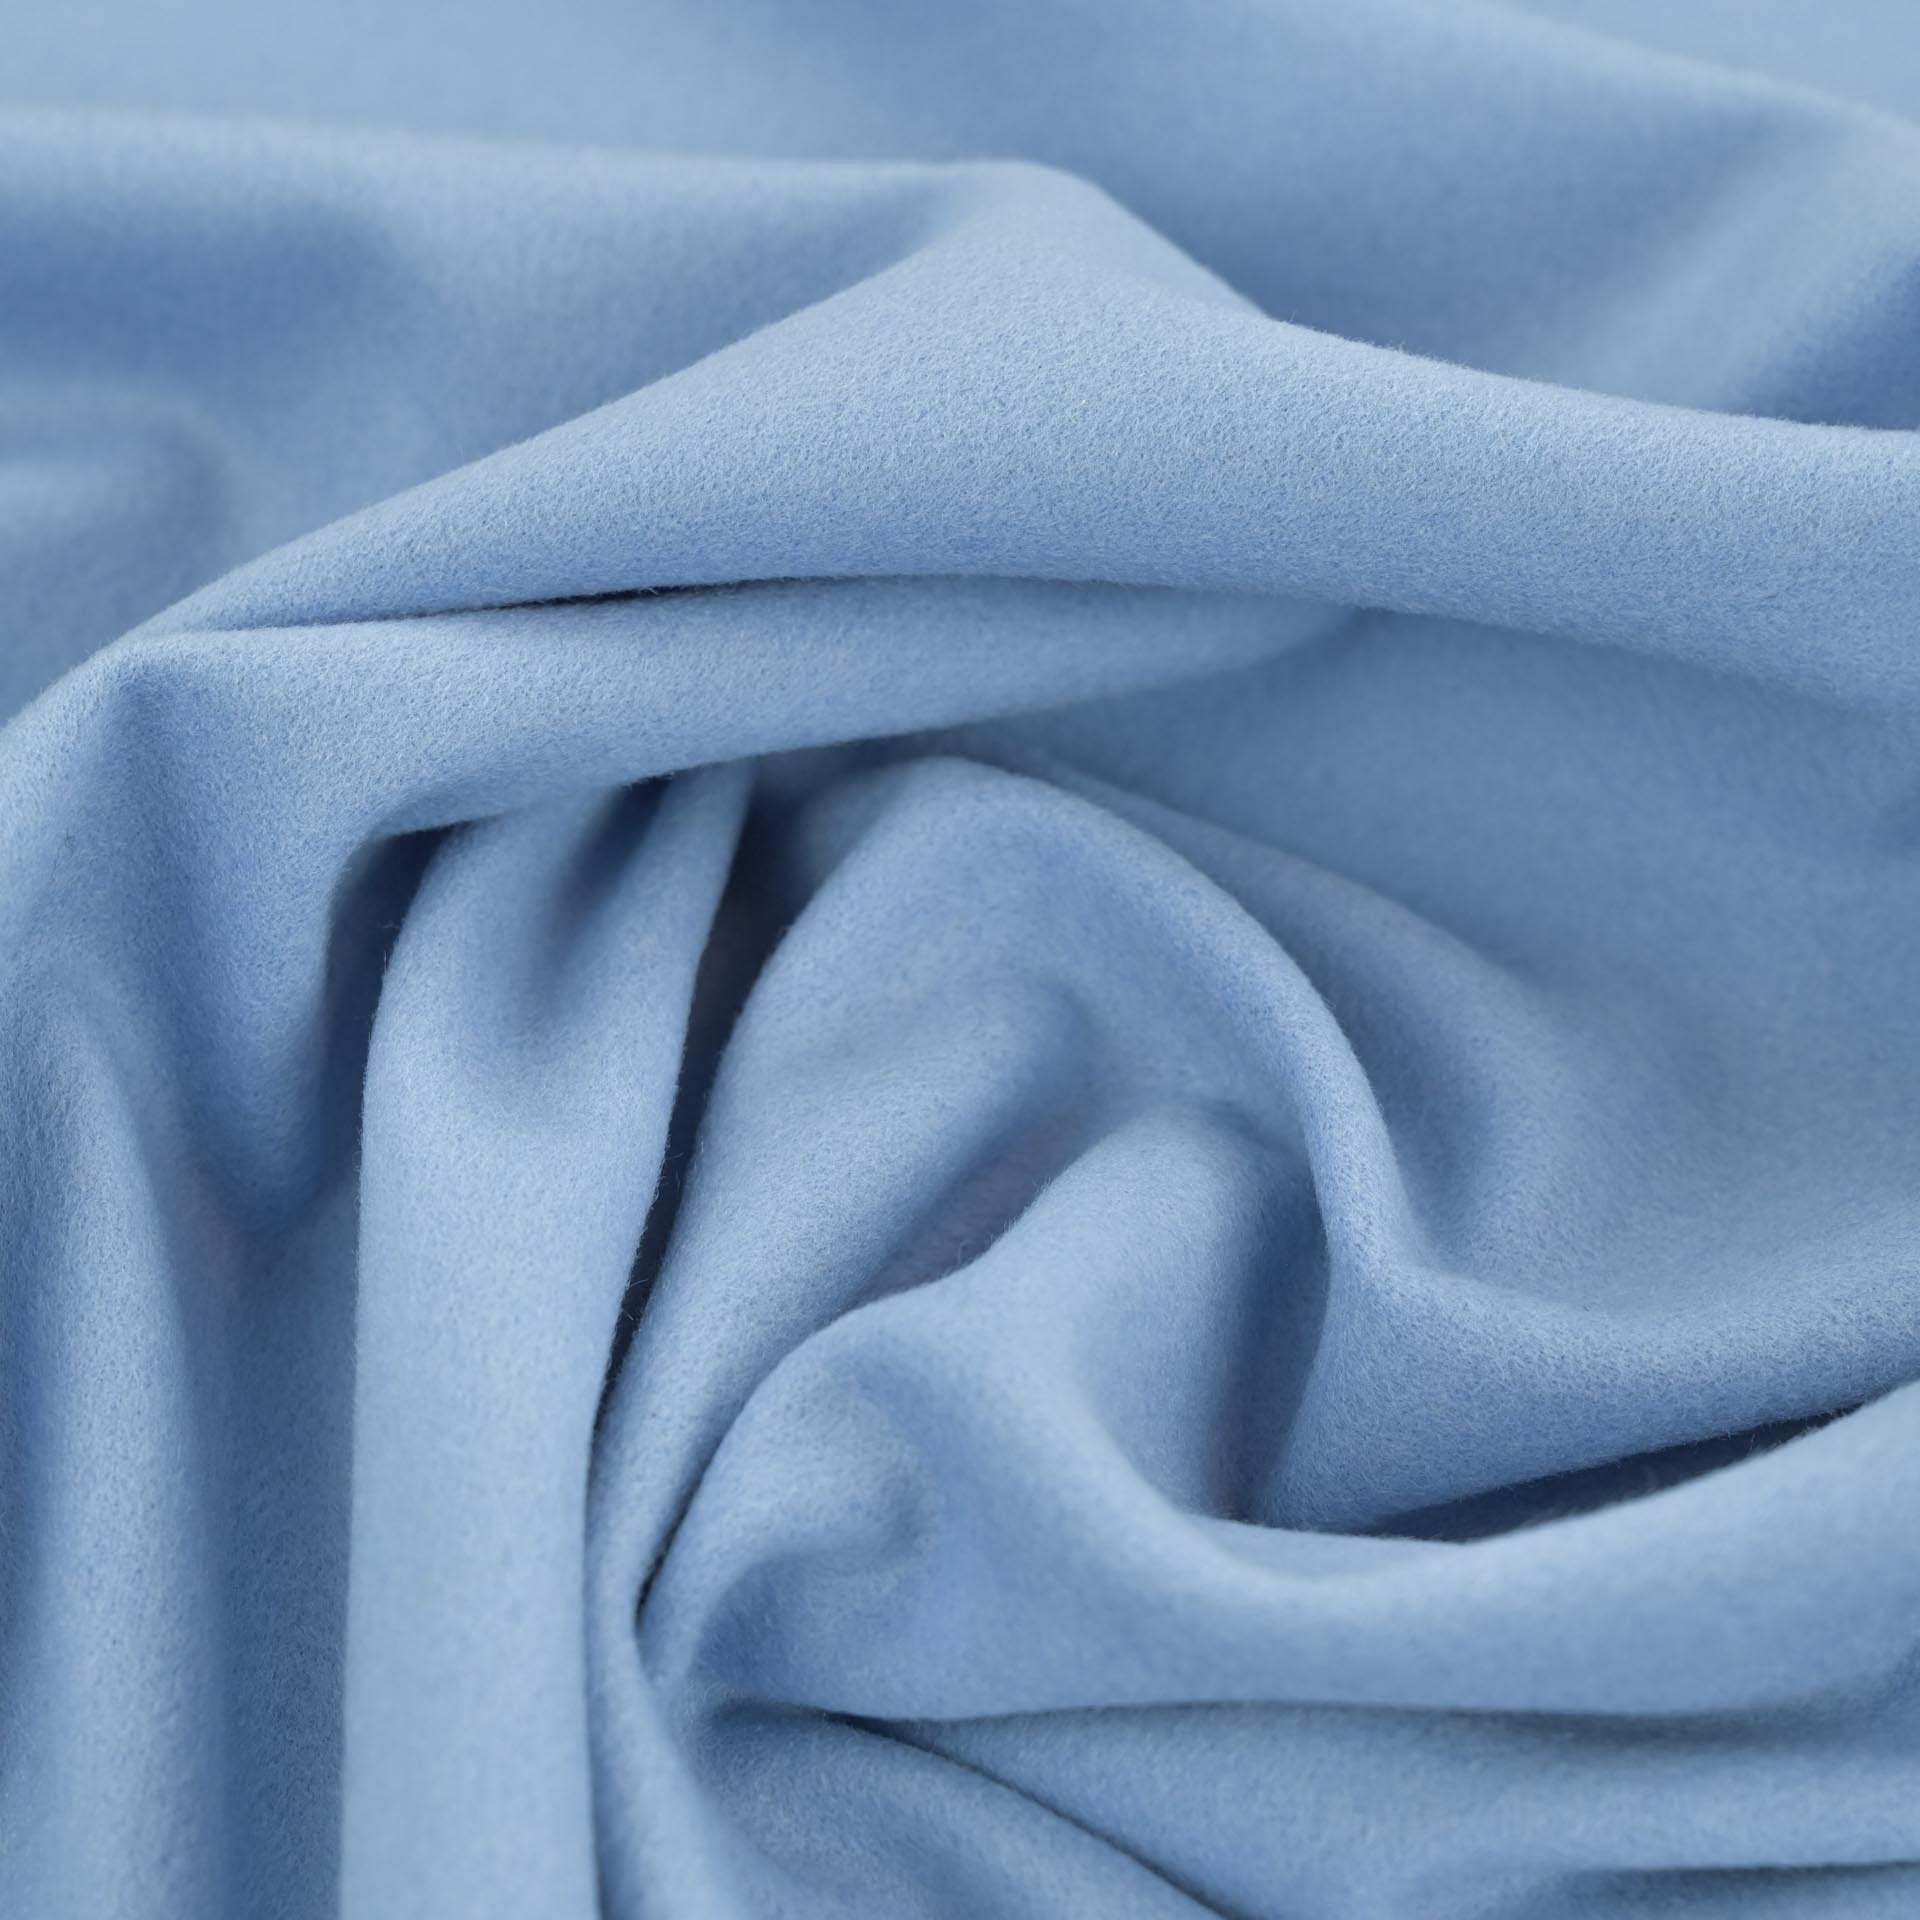 Baby Blue Light Melton Fabric 1618